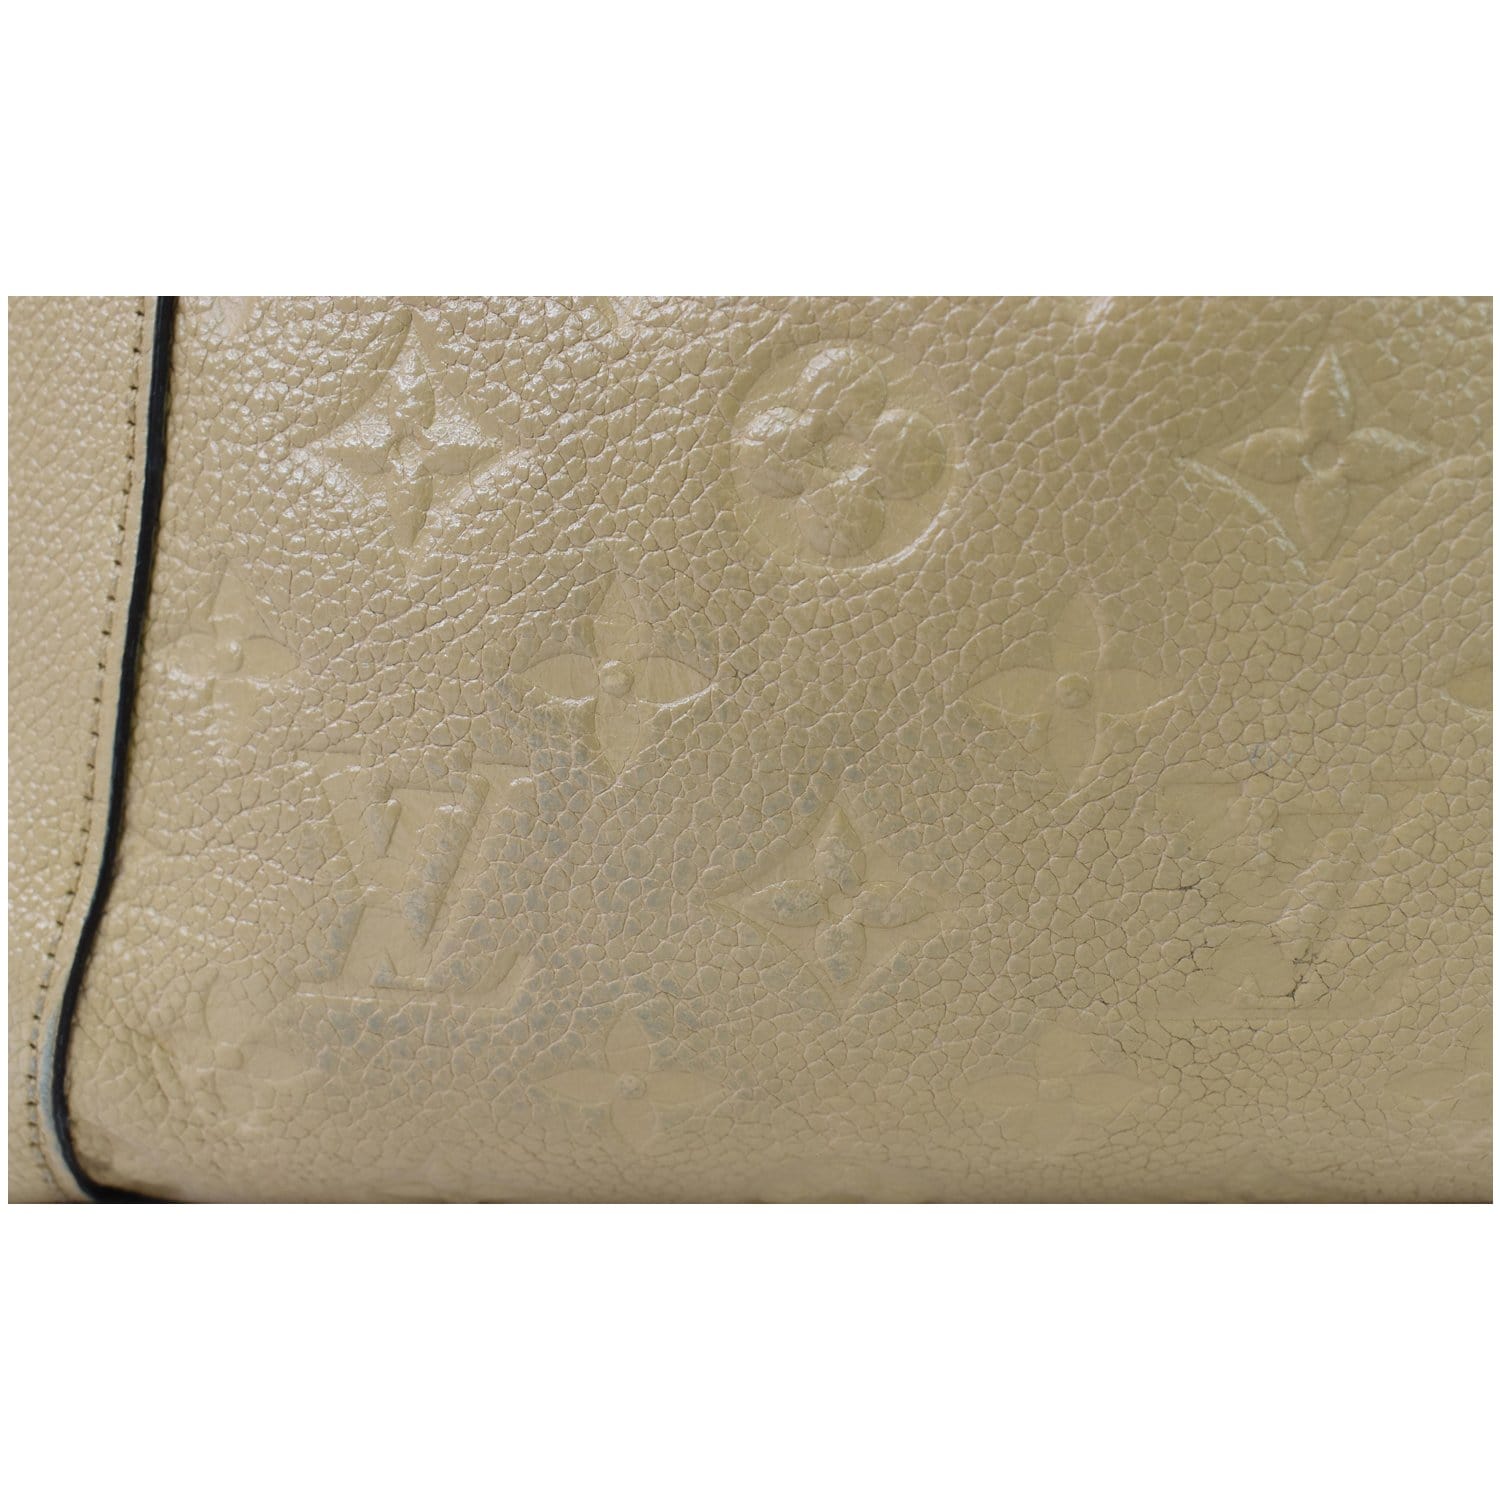 Louis Vuitton Bagatelle Monogram Empreinte Leather Bag